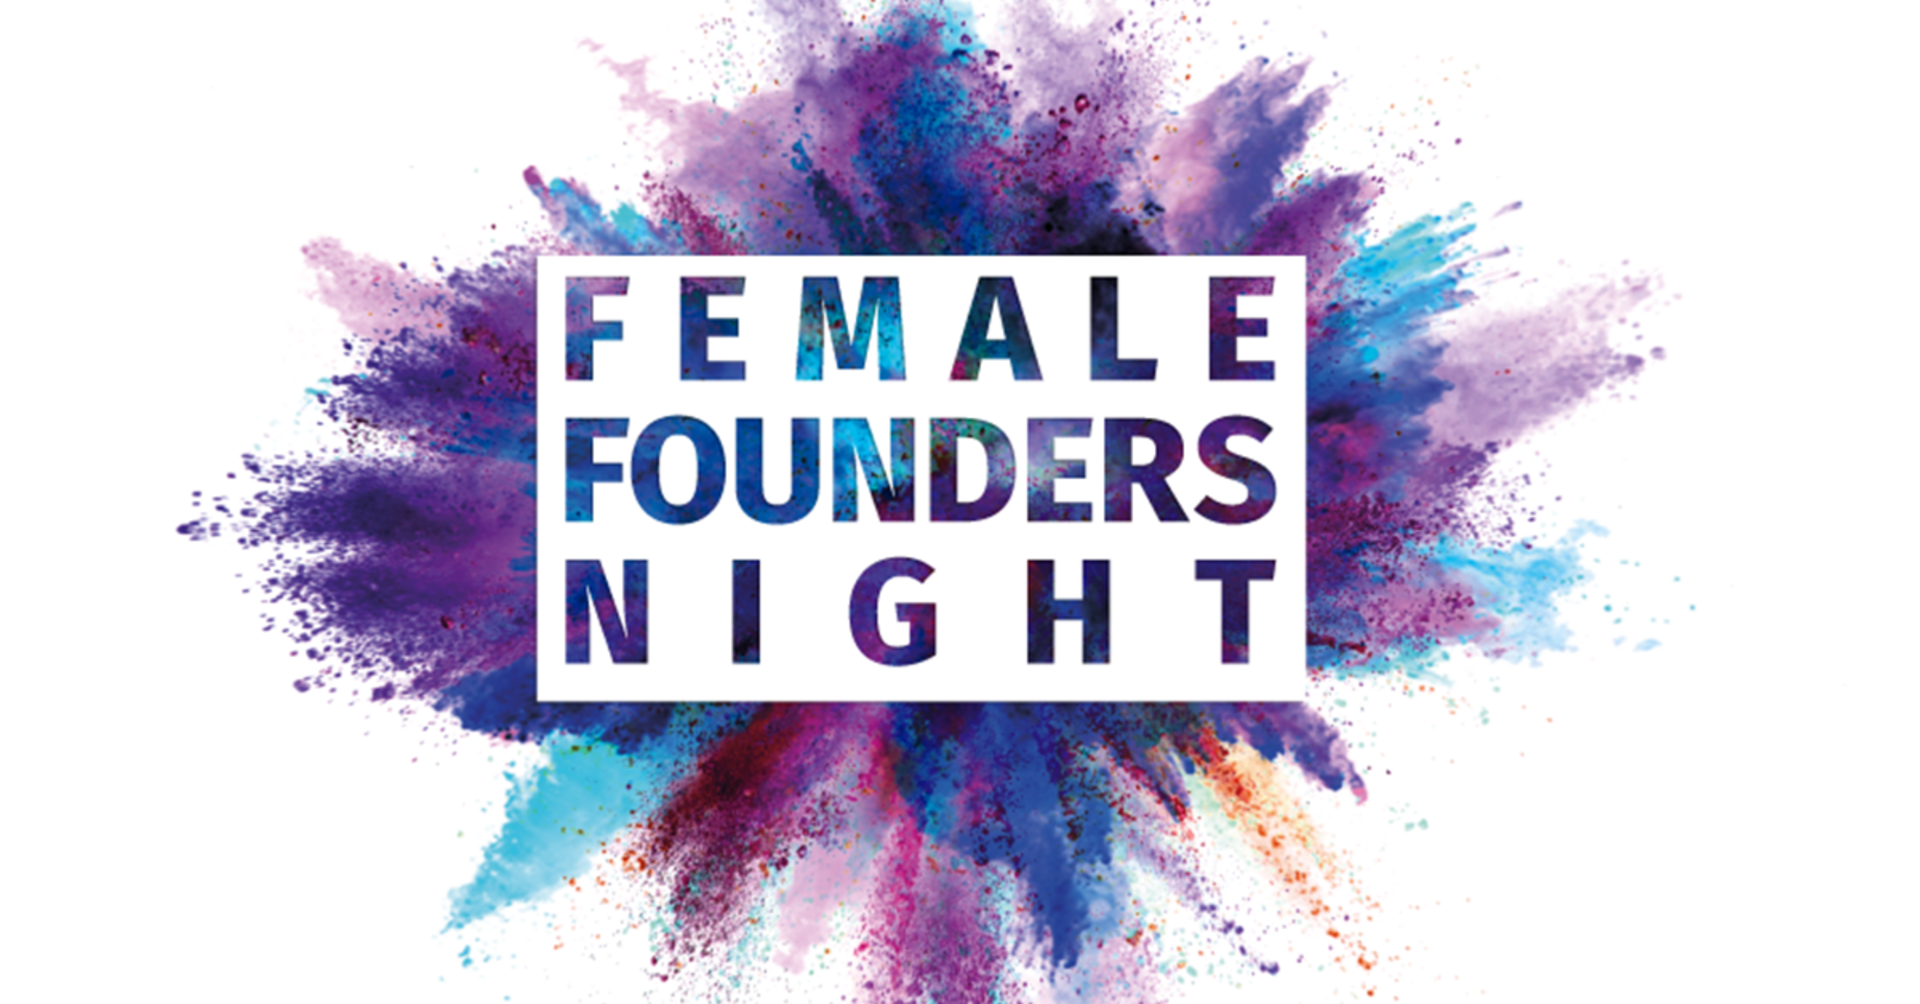 5. Female Founders Night